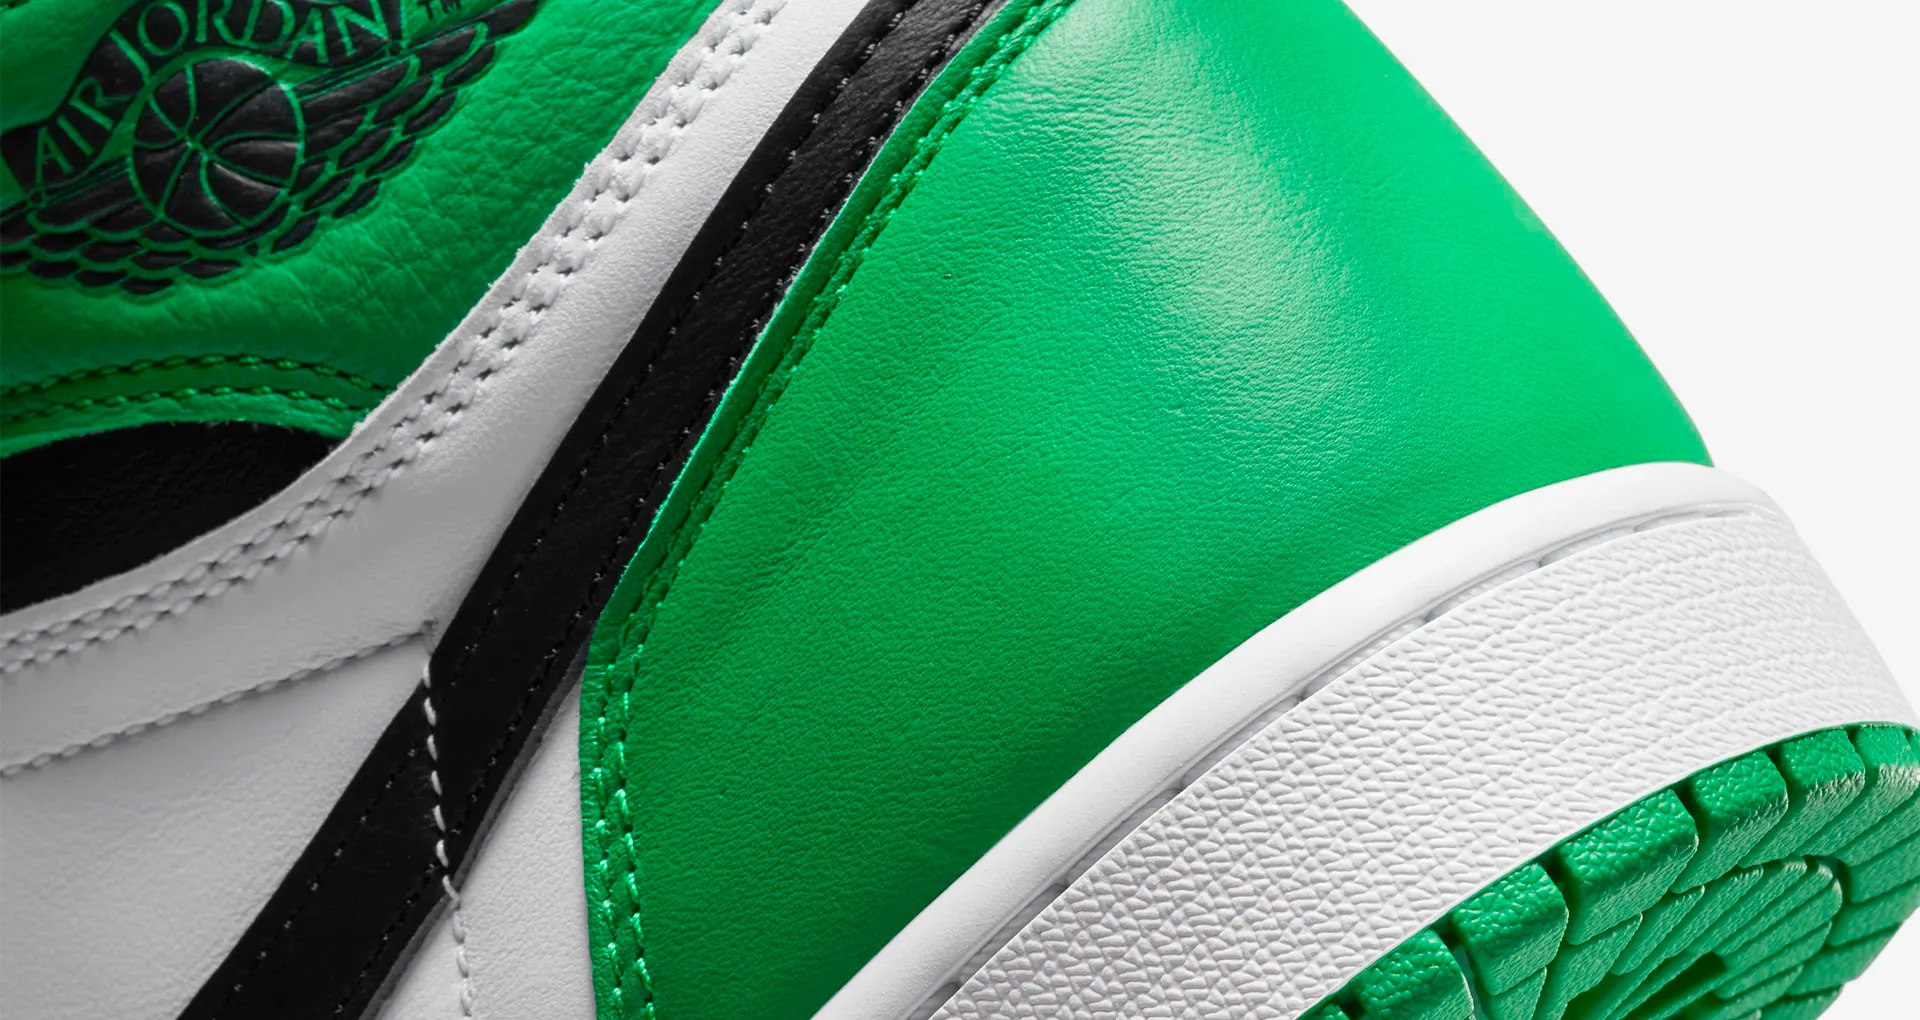 Where to Buy the Air Jordan 1 High “Black & Lucky Green”